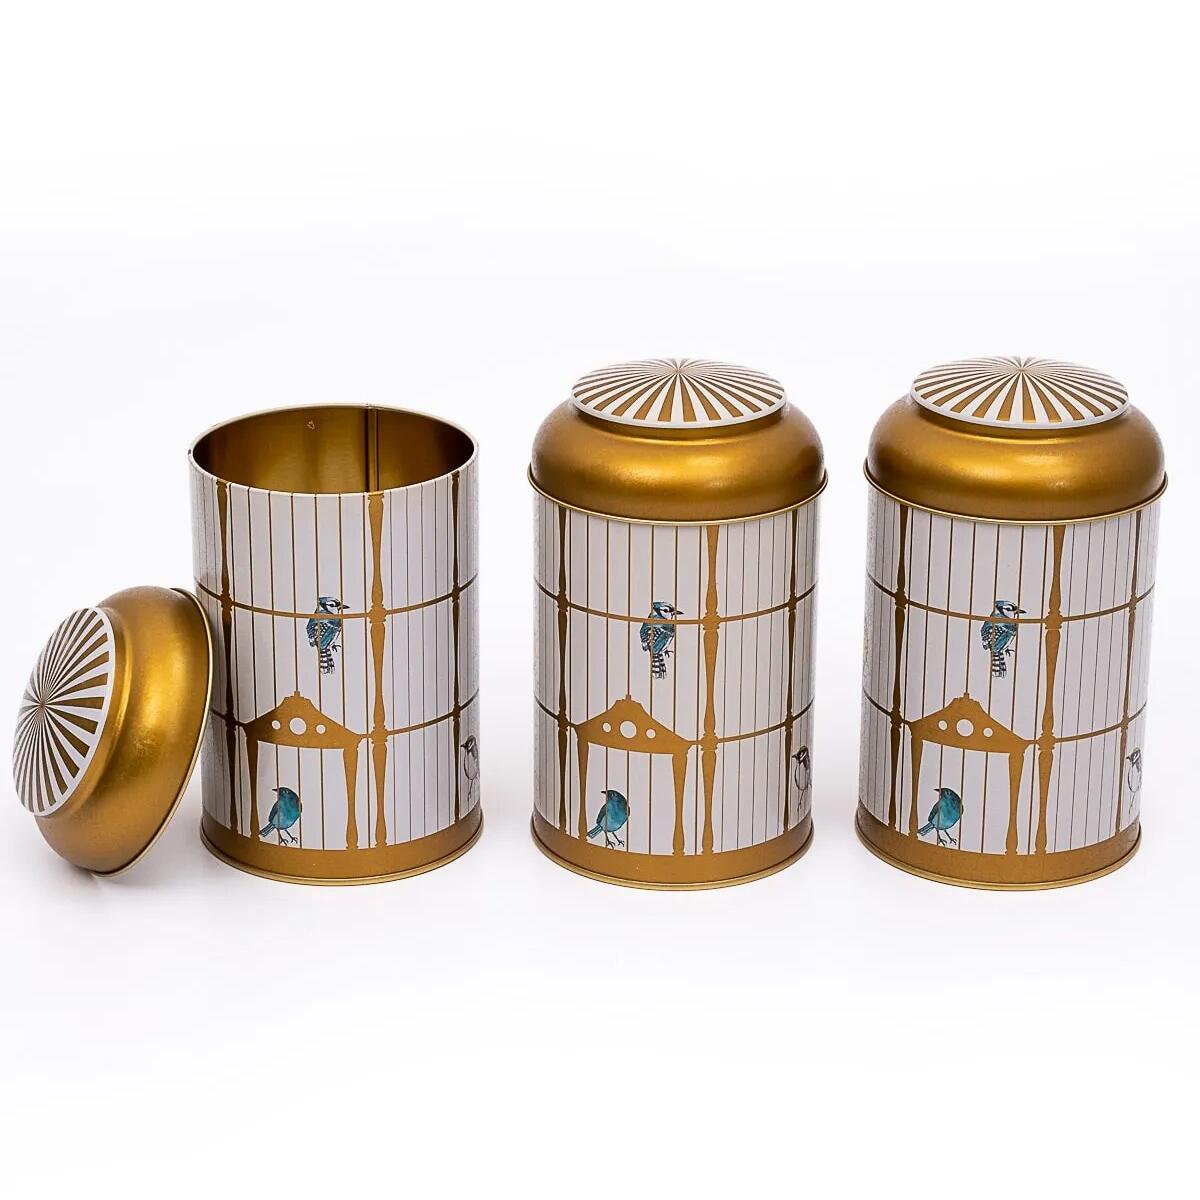 Evle Birdcage Cylinder Storage Container Set 3 Pieces